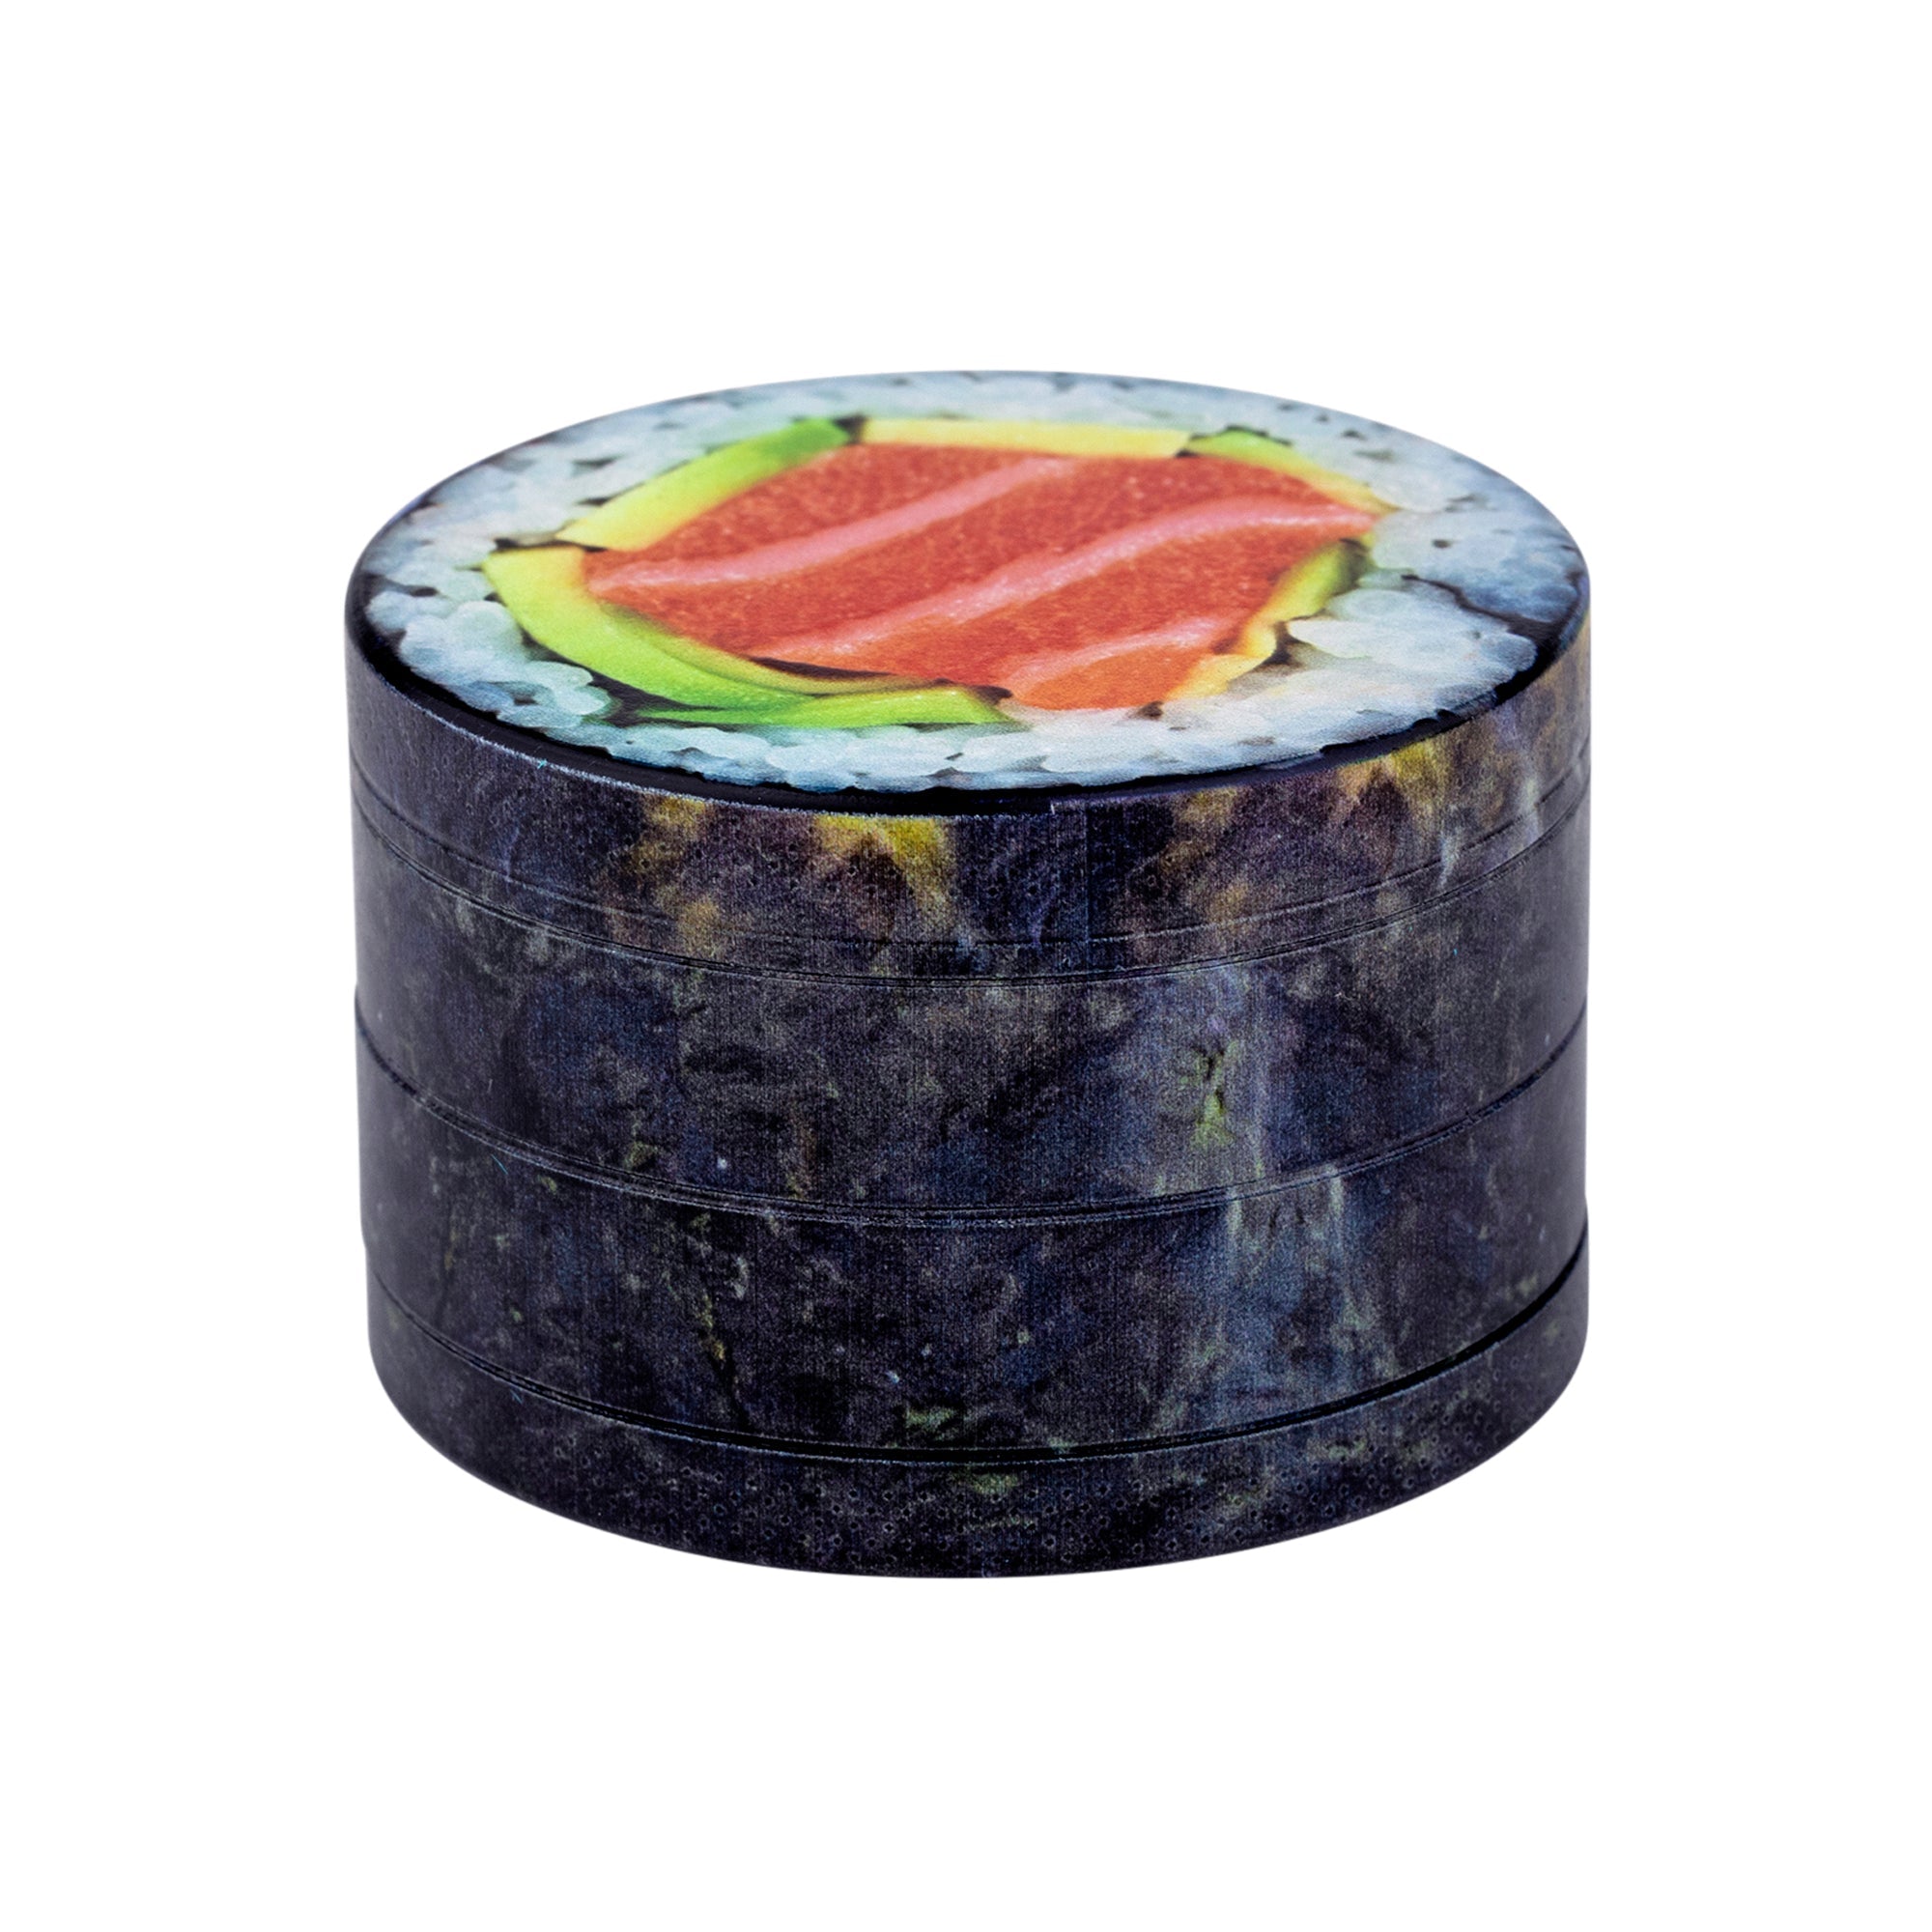 https://cdn.shopify.com/s/files/1/0268/8421/0734/products/v-syndicate-sharpshred-dine-in-4-piece-grinder-sushi-roll.jpg?v=1679426349&width=2000